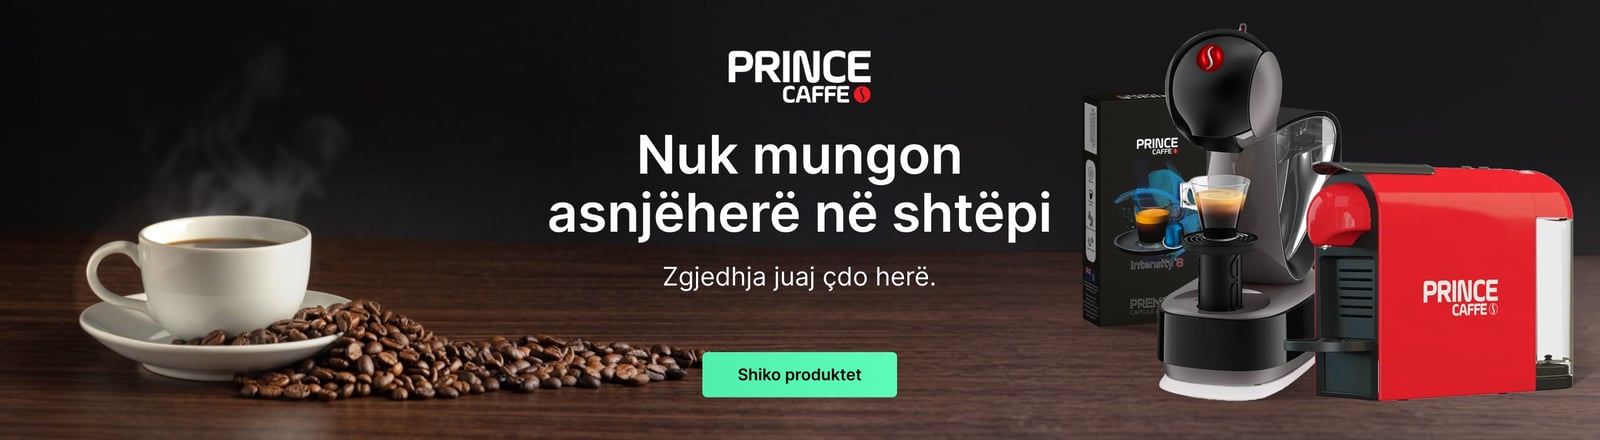 Banner-prince-caffe-web